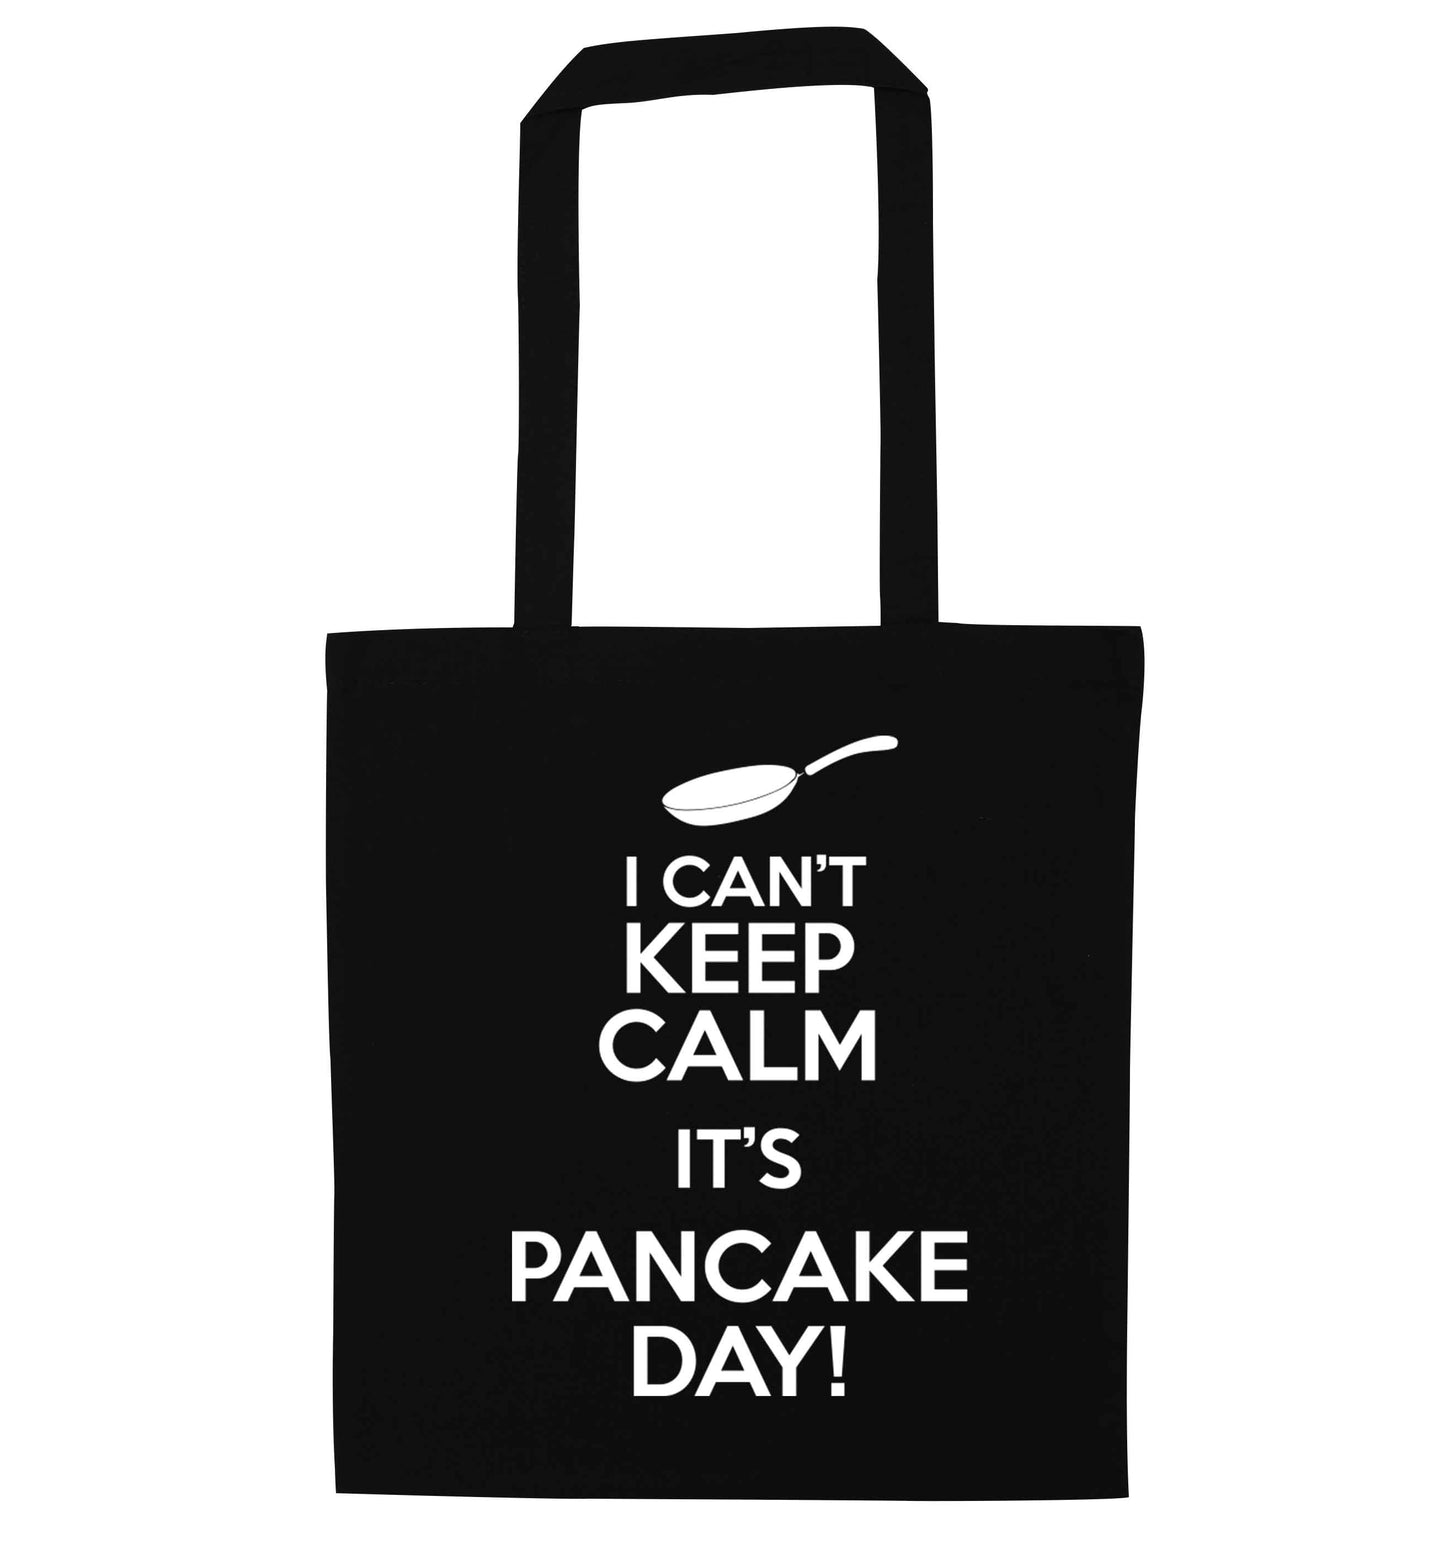 I can't keep calm it's pancake day! black tote bag